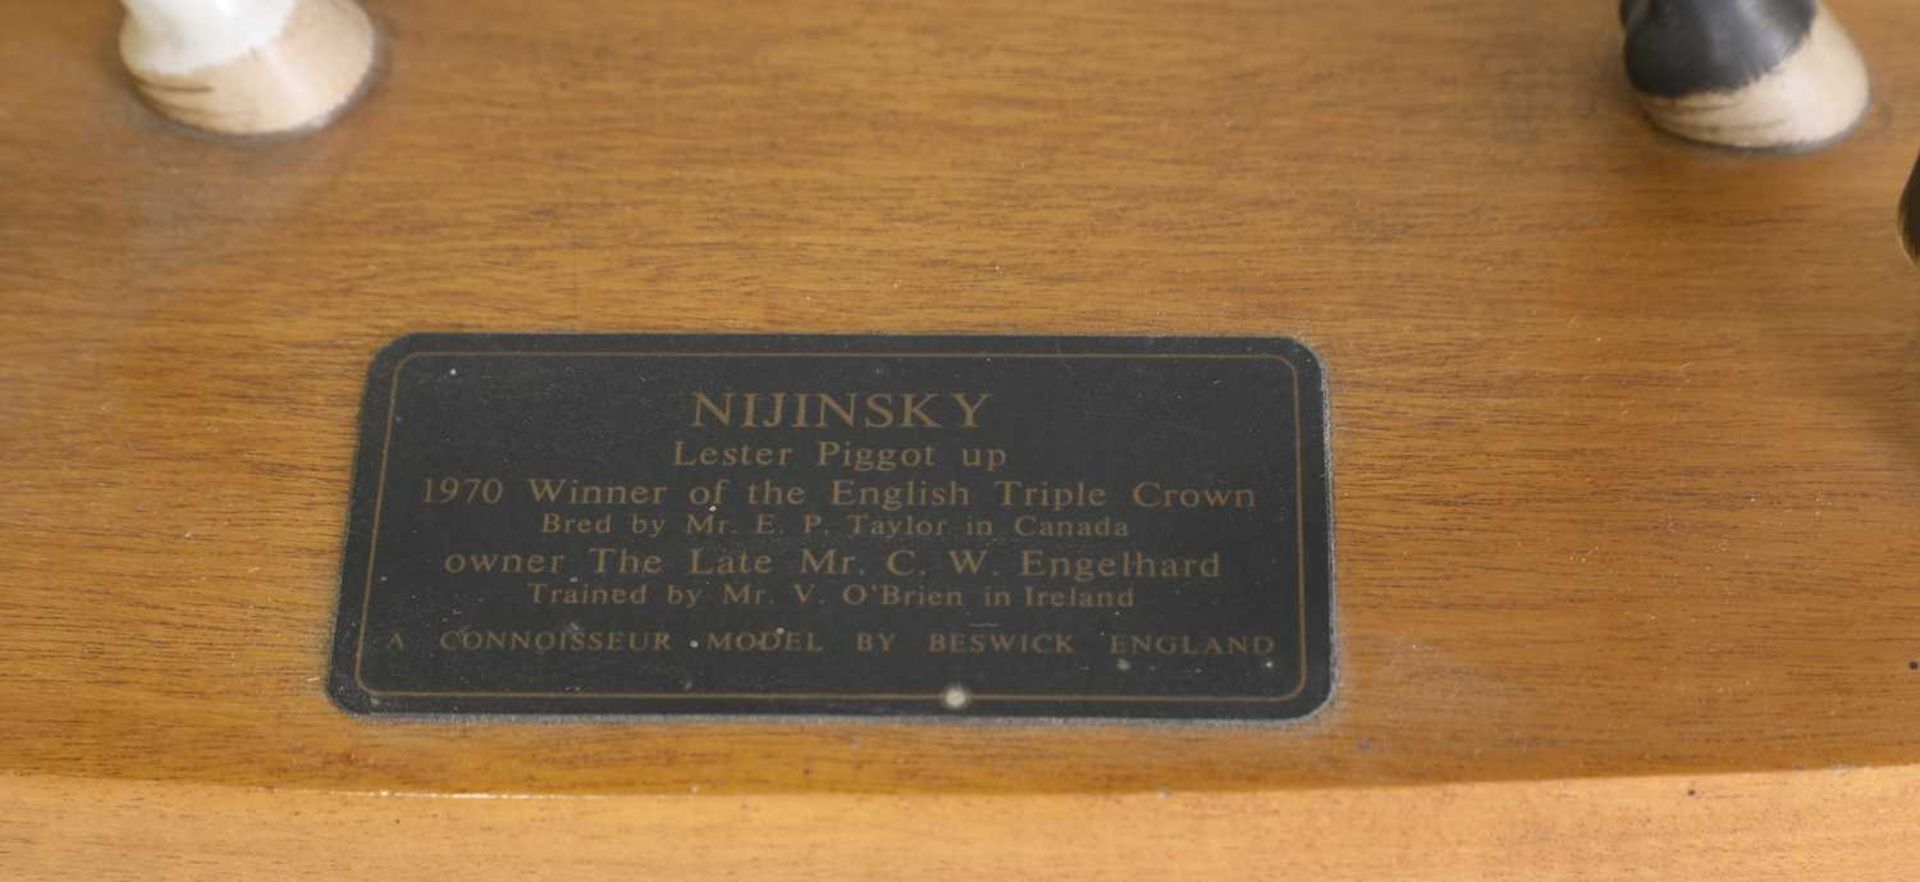 Beswick model of Nijinsky with Lester Piggott up, - Image 5 of 5